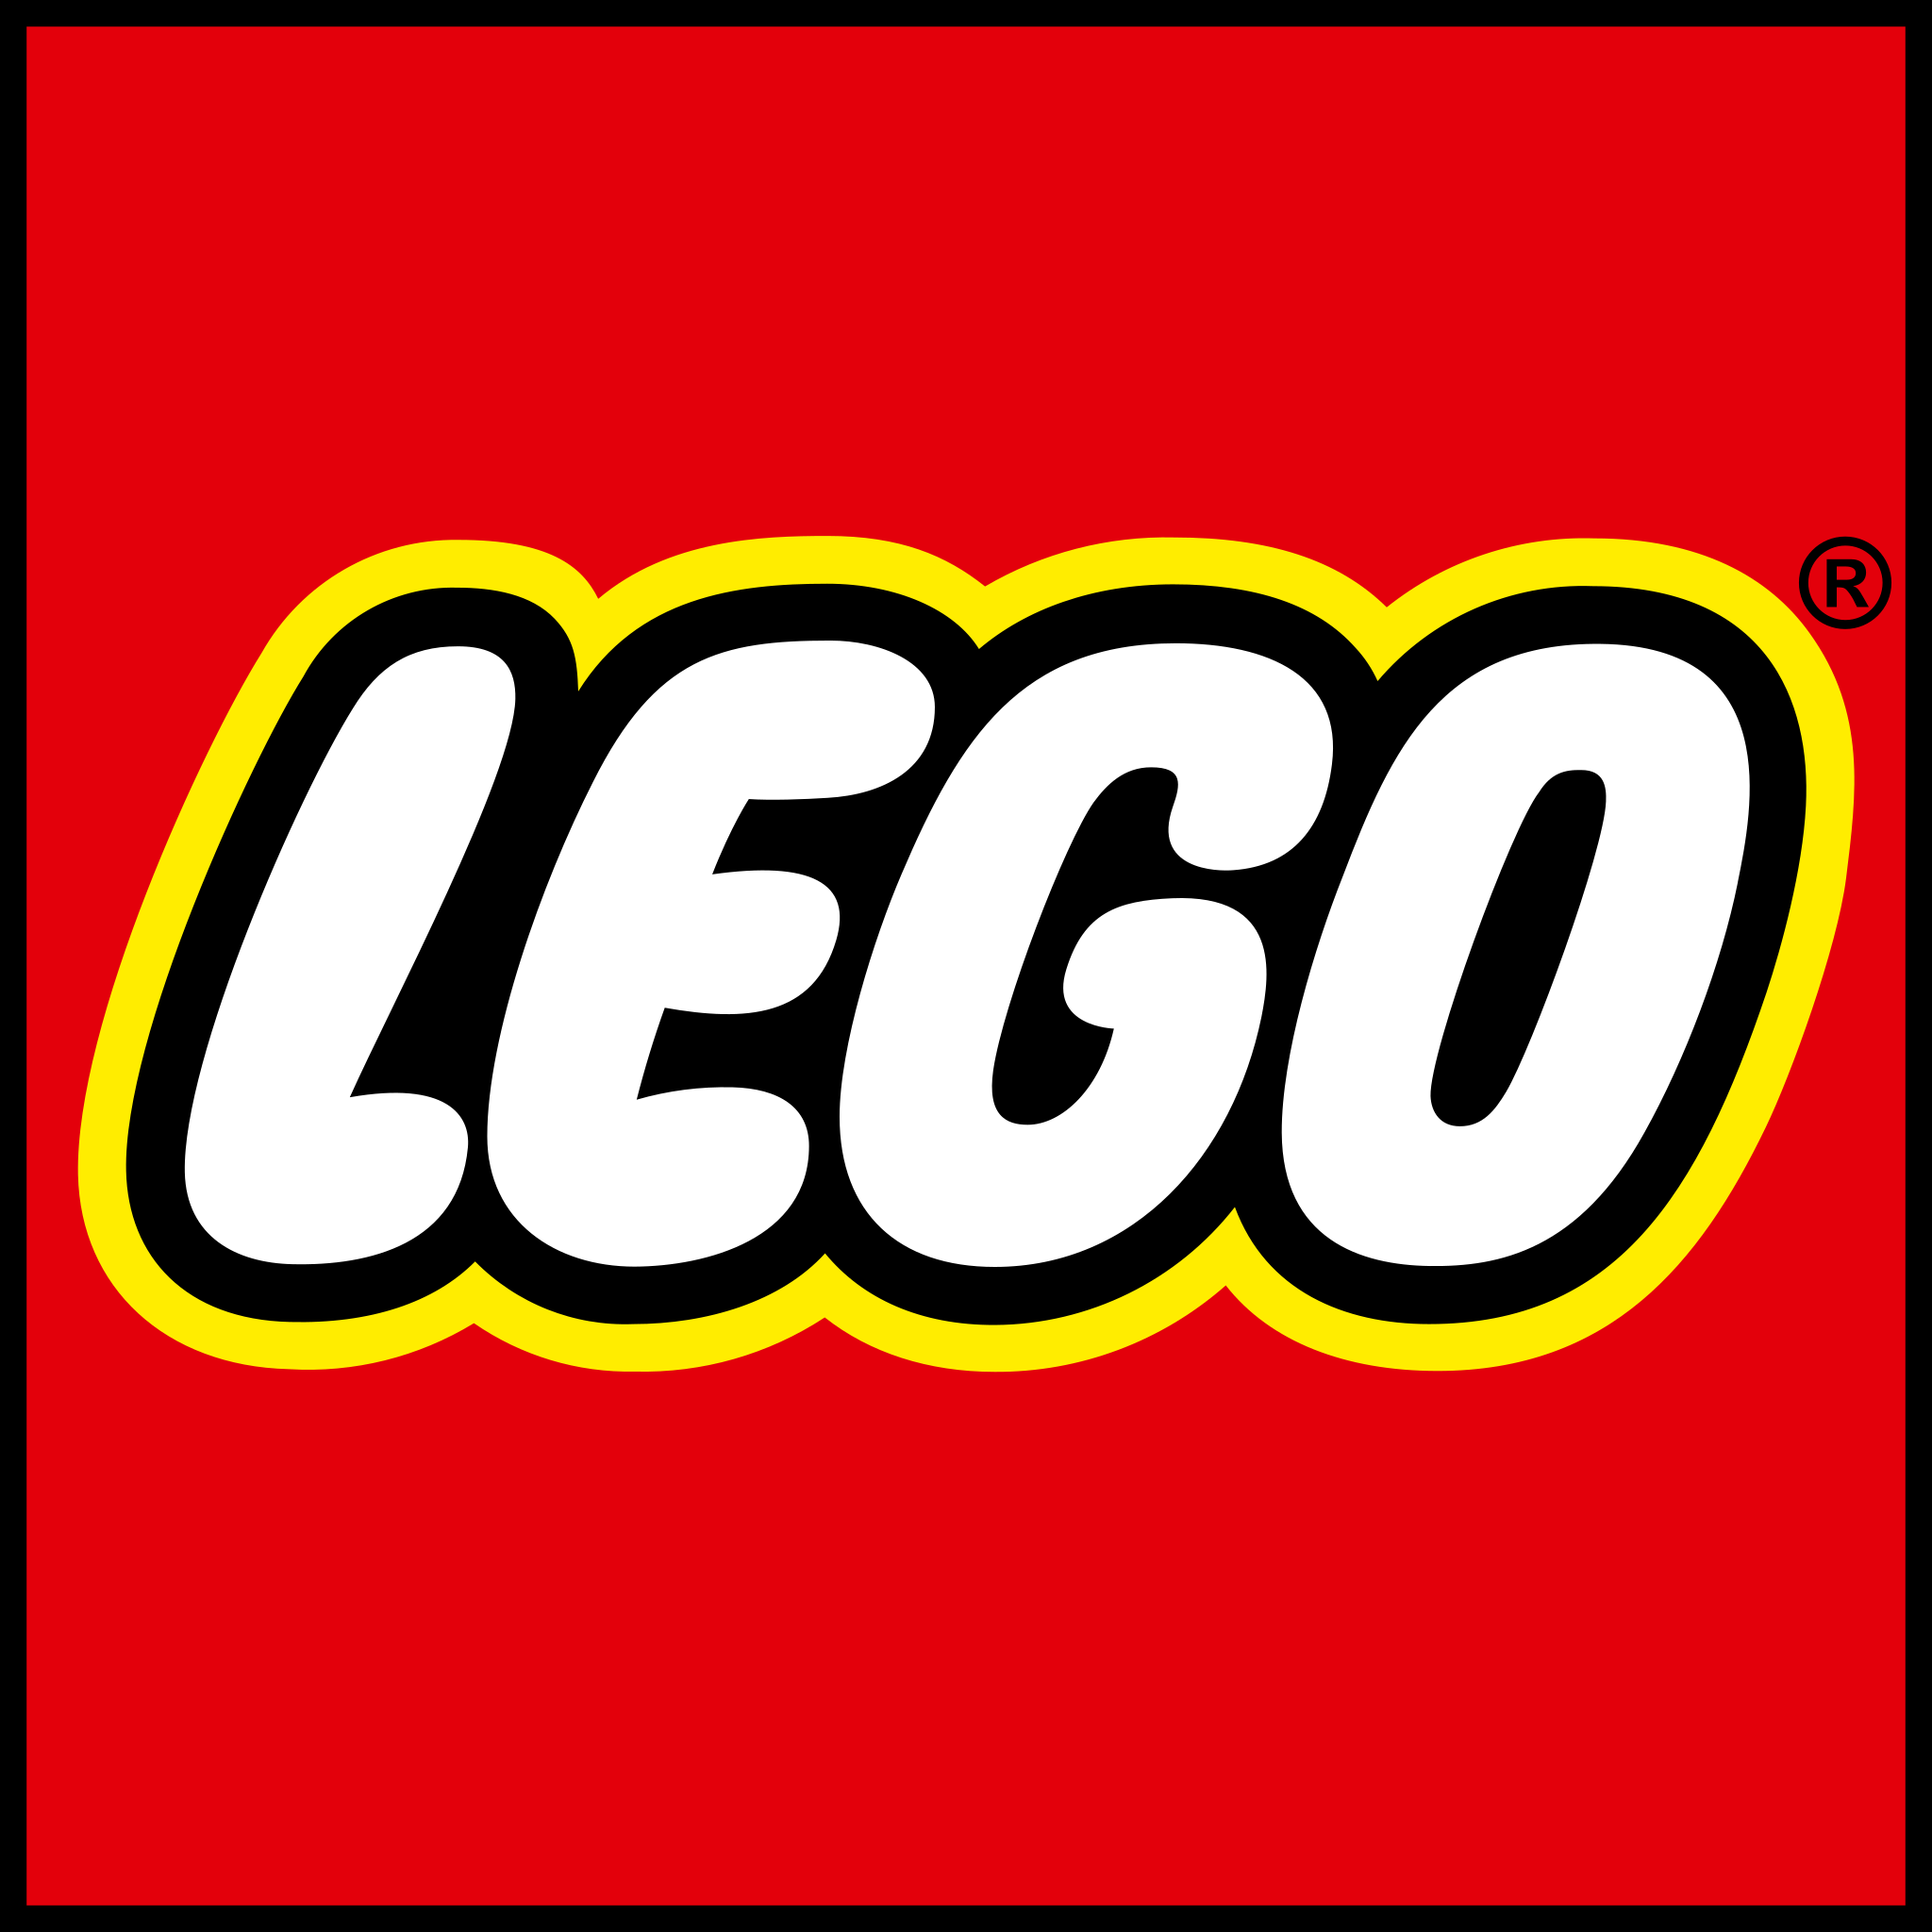 Logo LEGO®